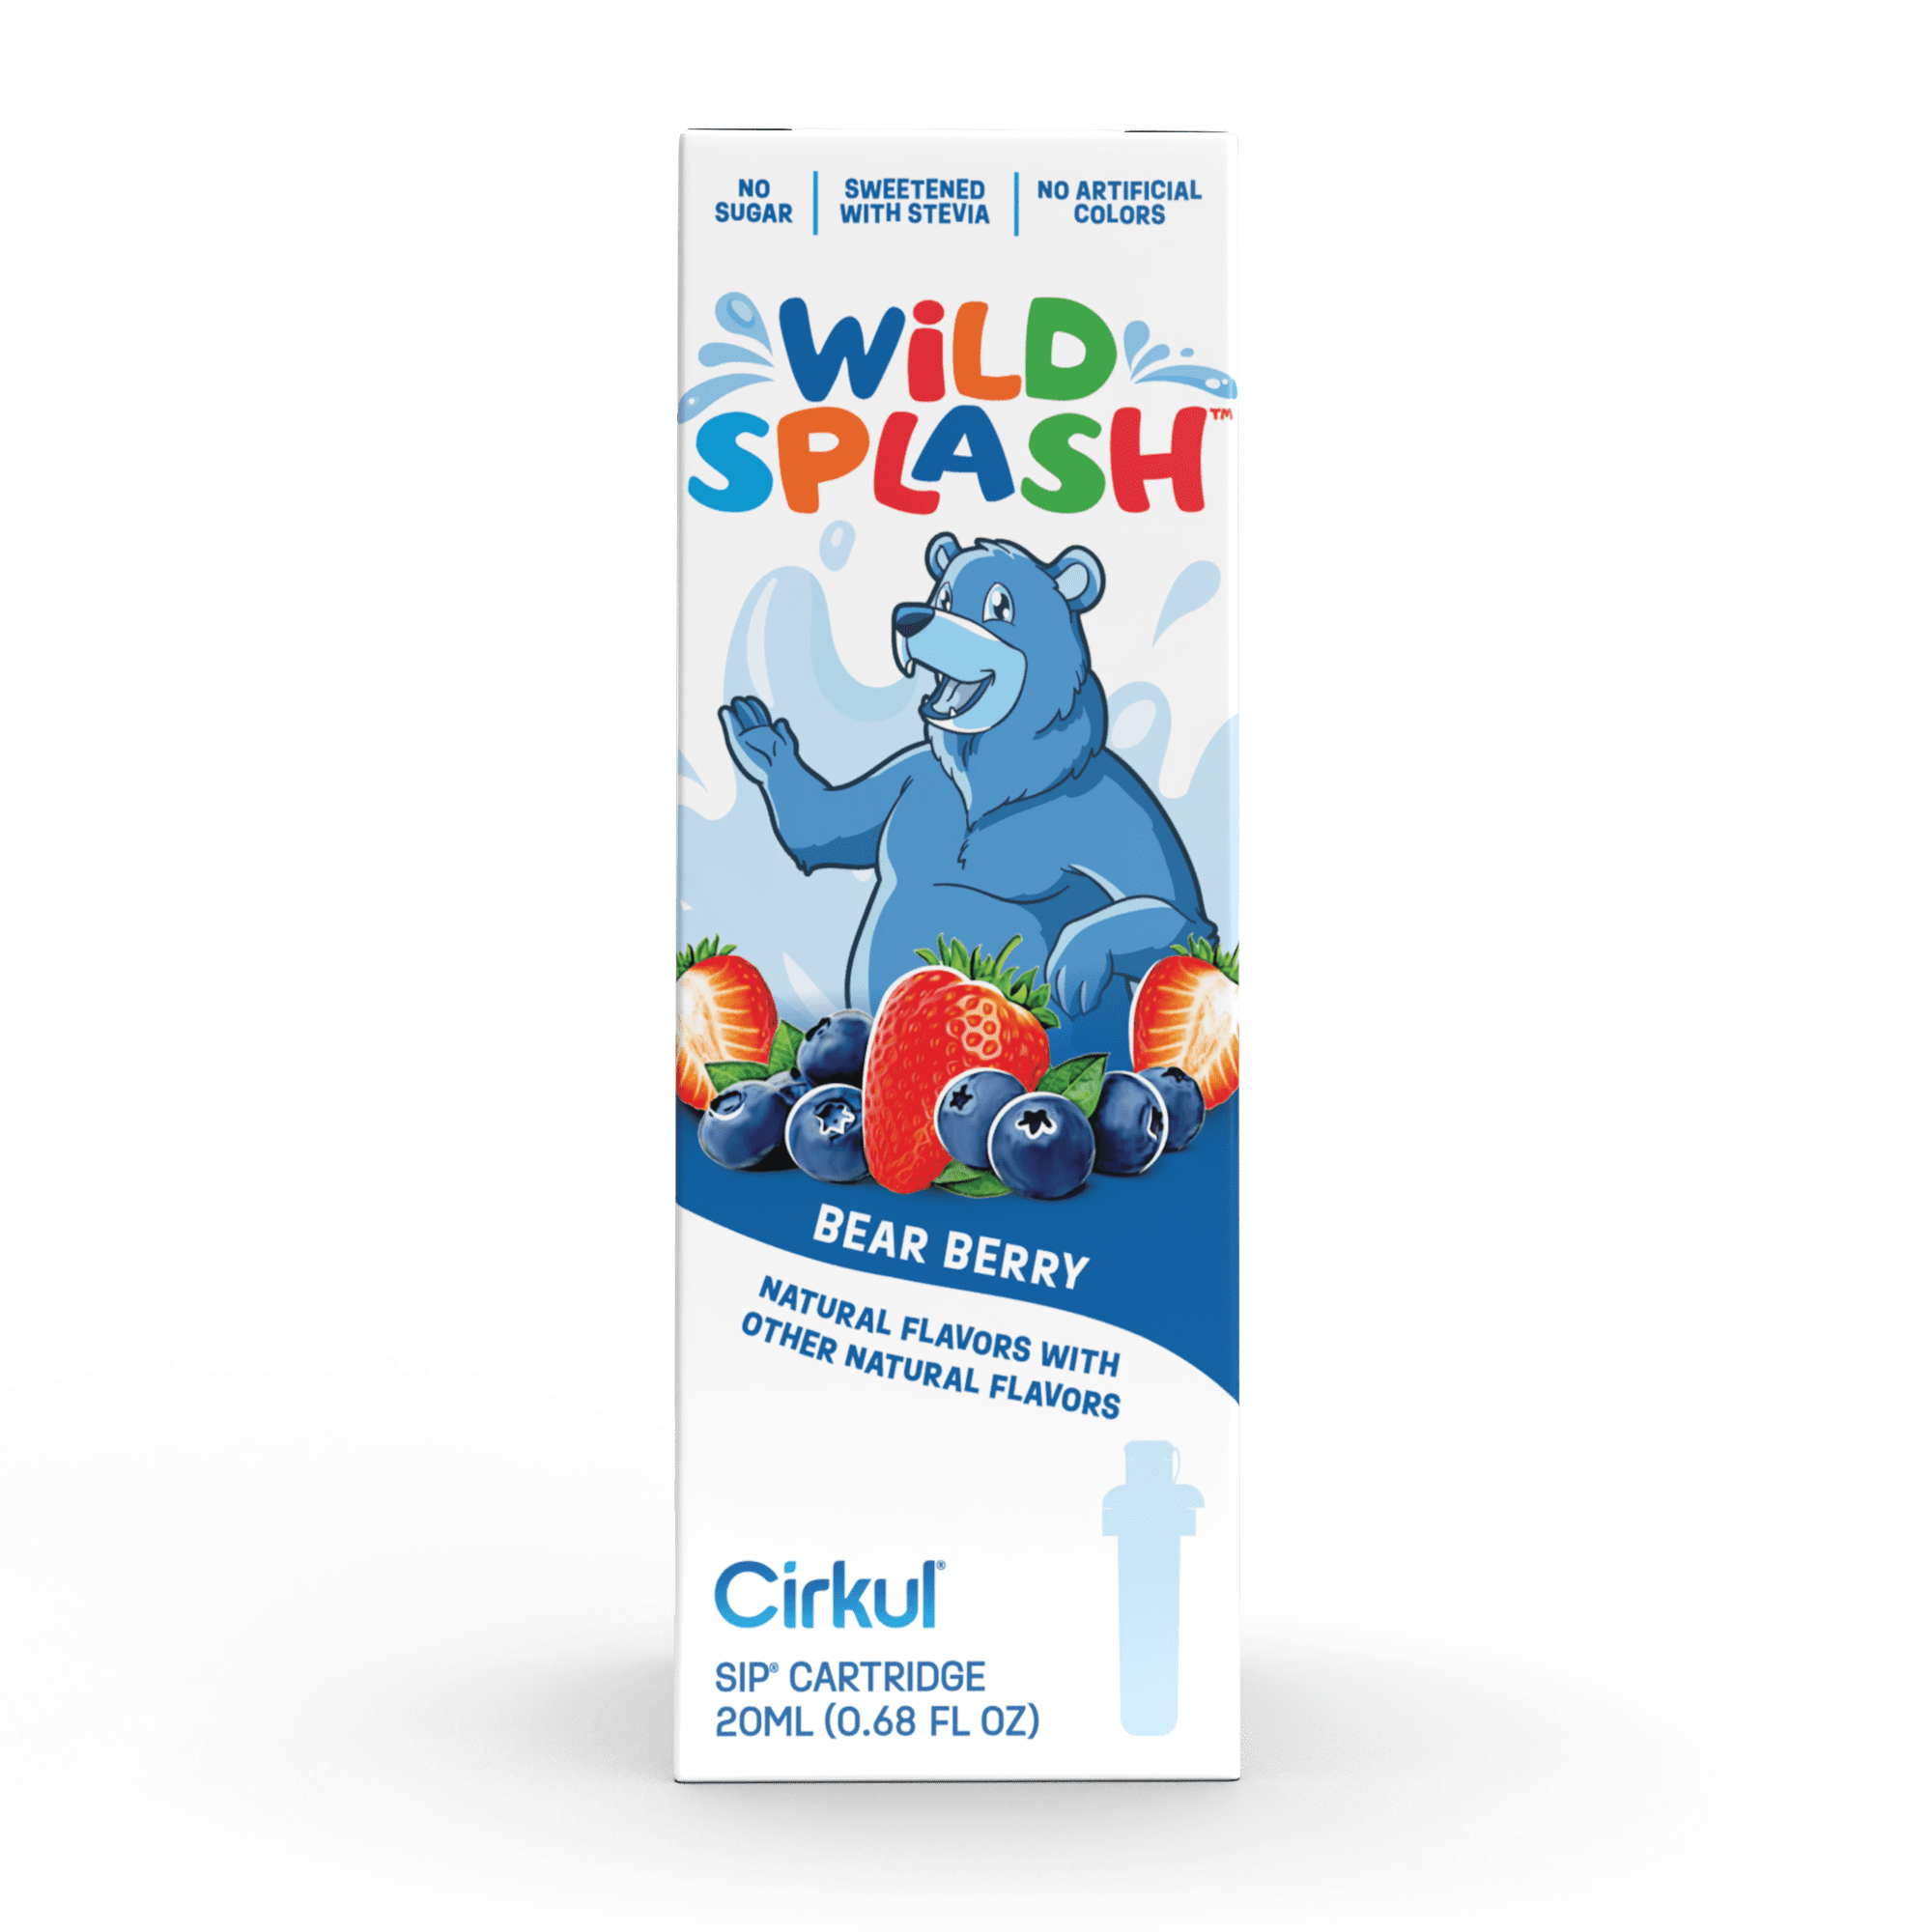 Cirkul Wild Splash Gecko Grape Flavor Cartridge, Drink Mix, 1-Pack 